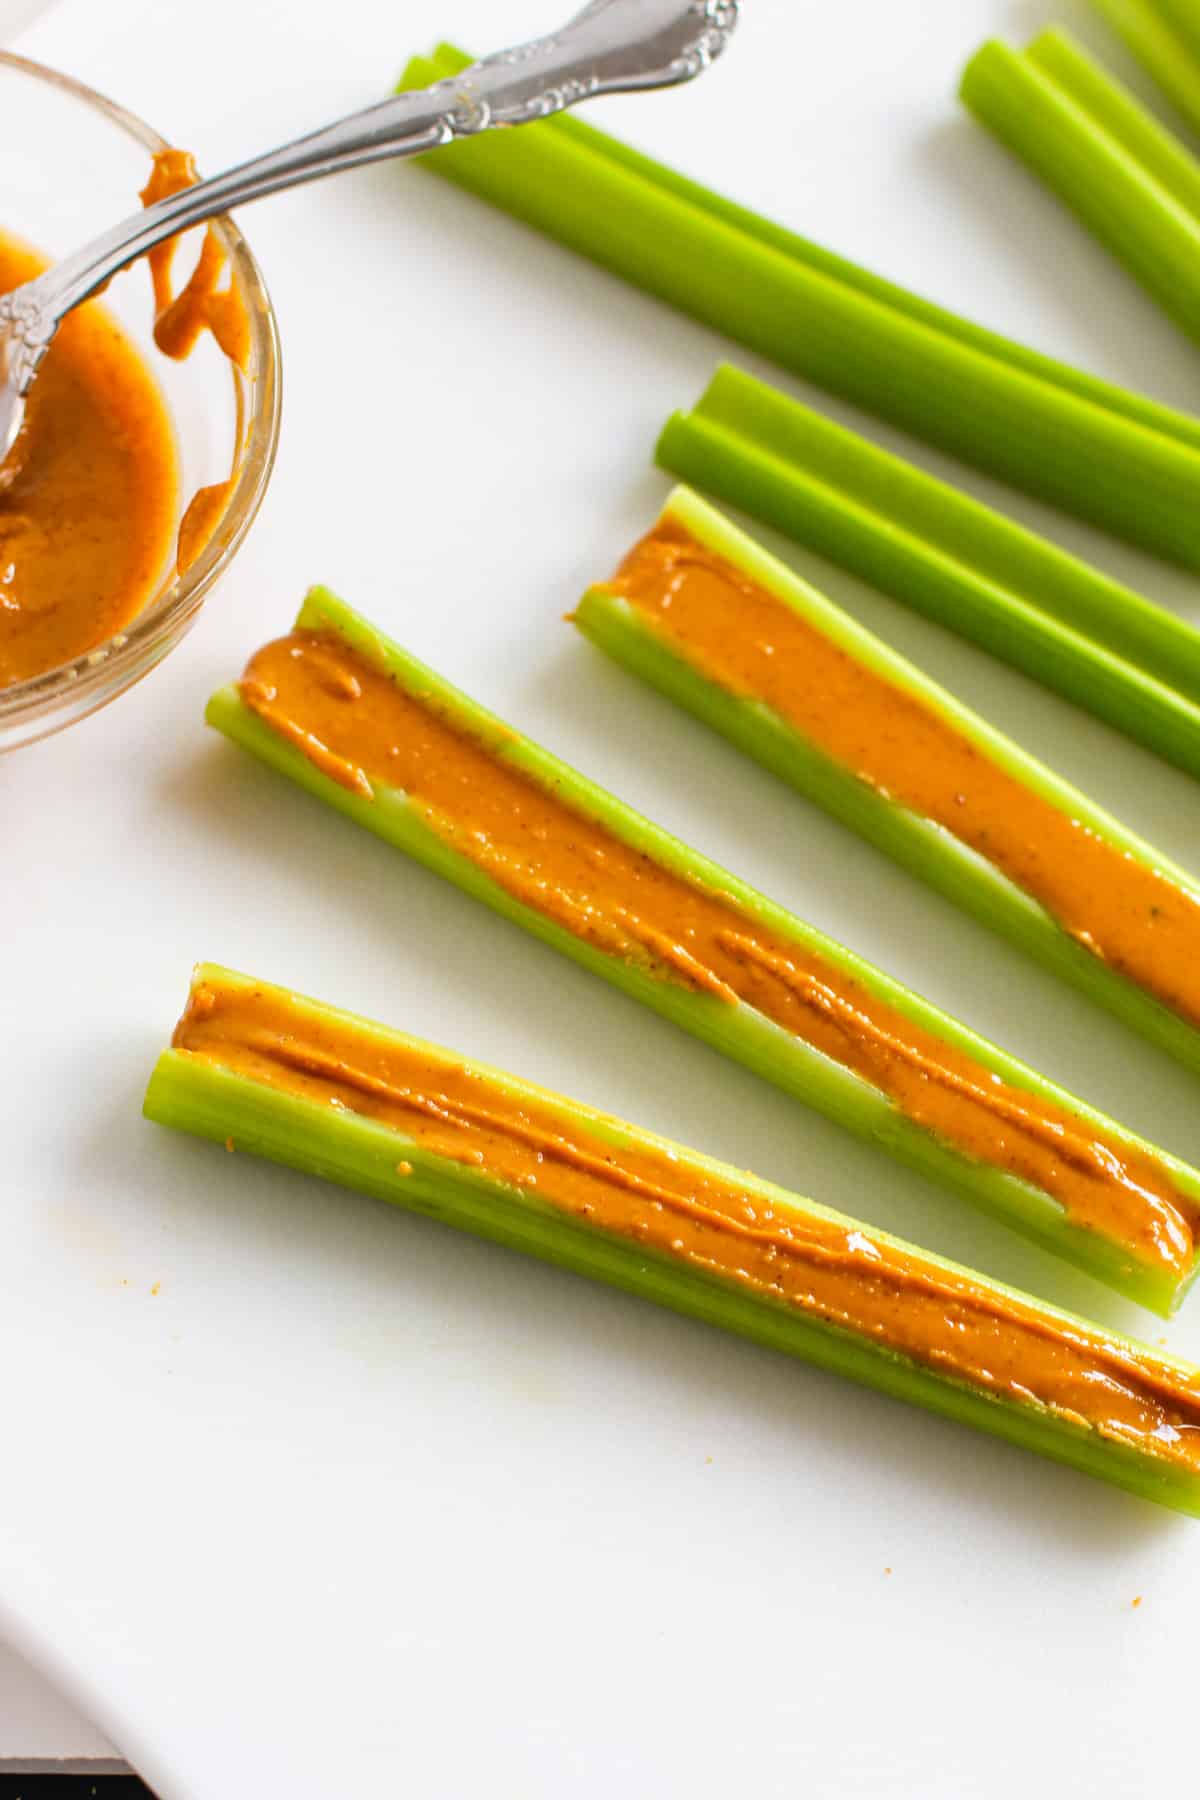 Celery sticks filled with peanut butter.